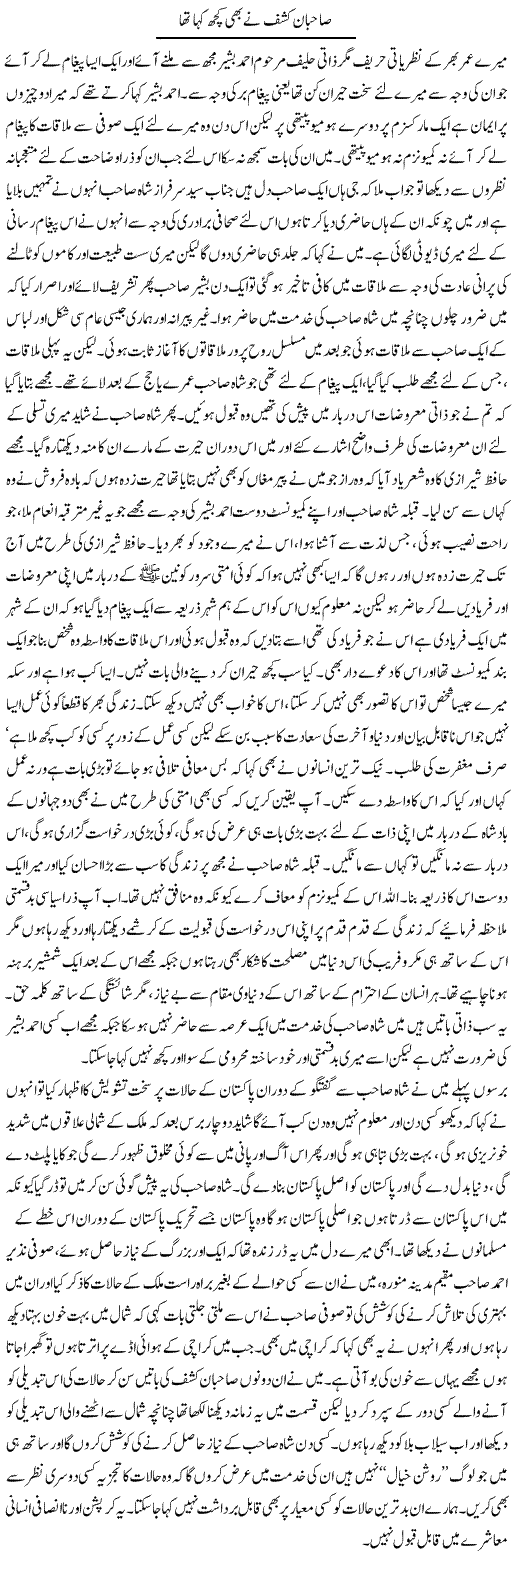 Sahaban Kashish Express Column Abdul Qadir 19 August 2010